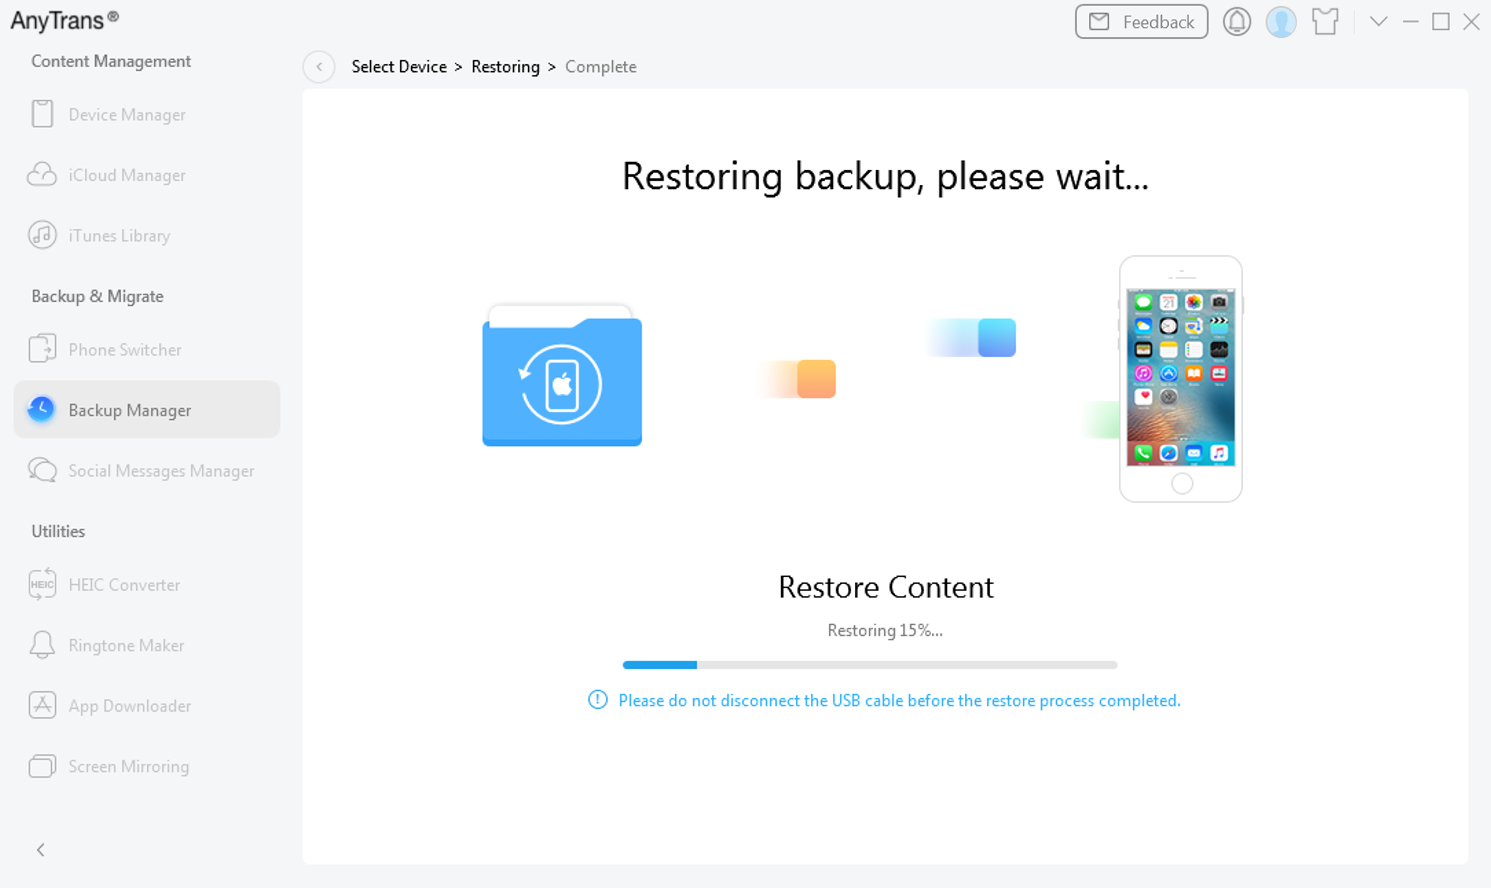 The Process of Restoring Backup